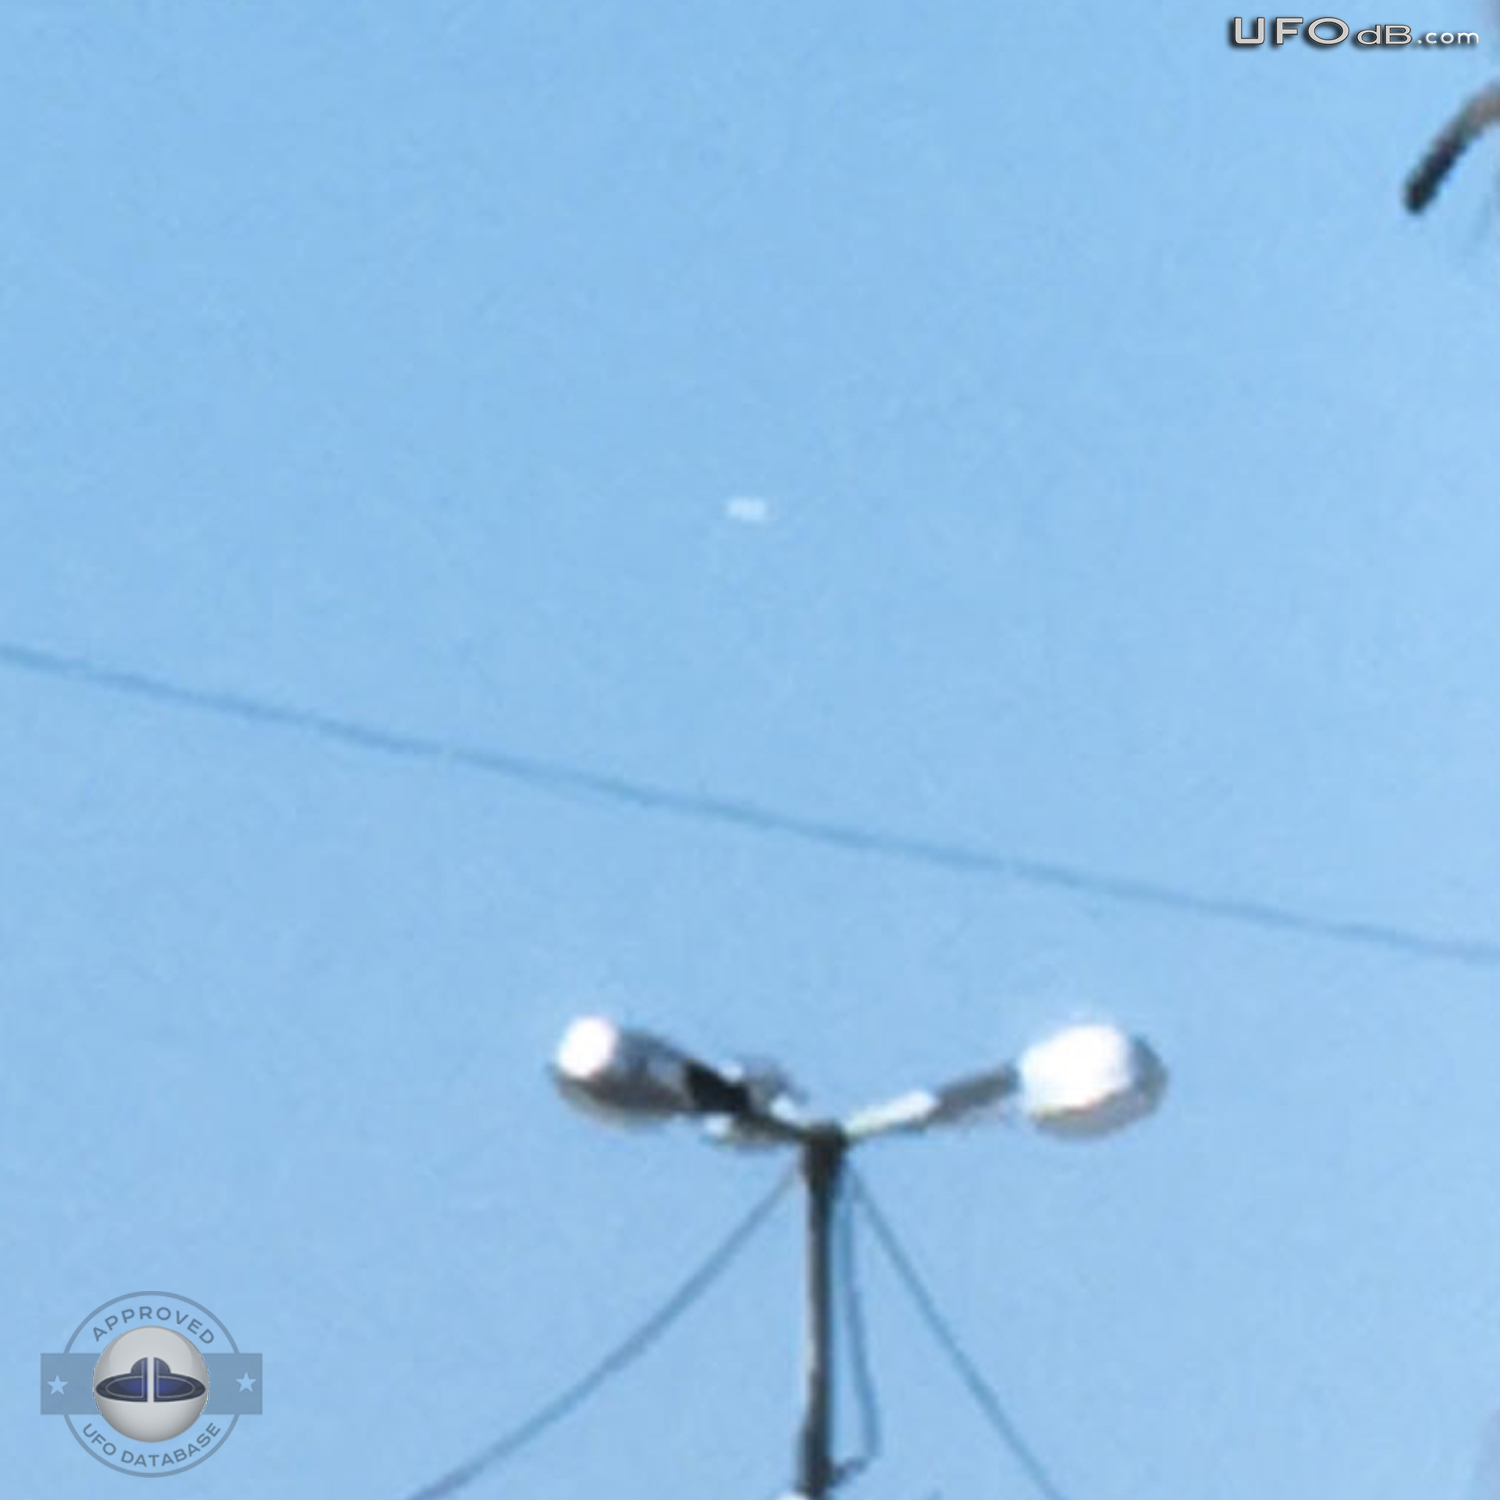 Rare Event | A UFO Picture taken in Albania | September 5 2010 UFO Picture #242-3